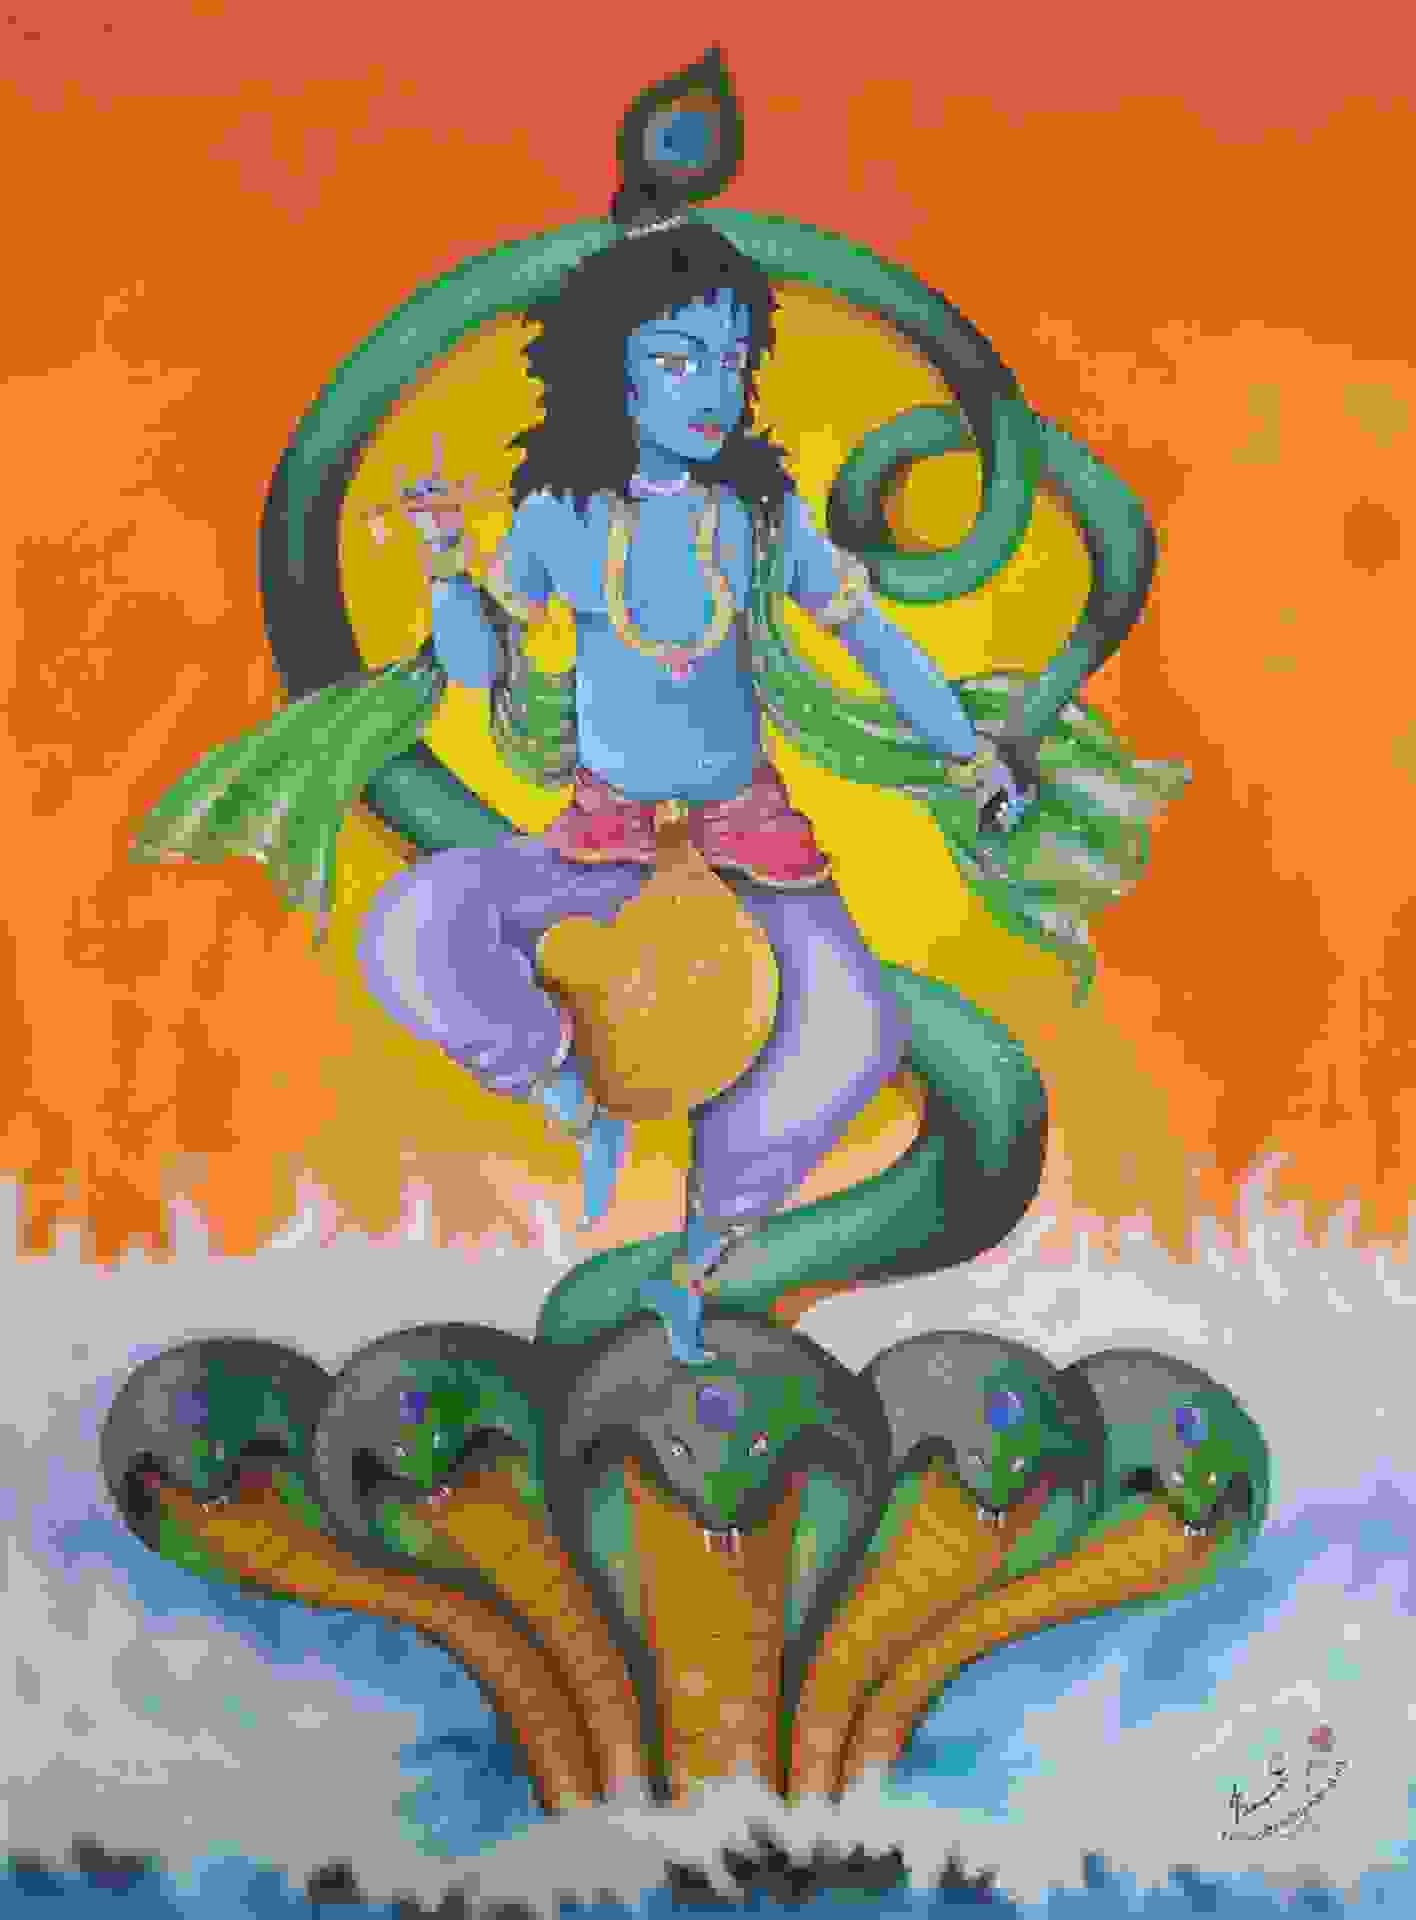 Painting Of Kalinga Mardhana In Acrylic On Cloth S